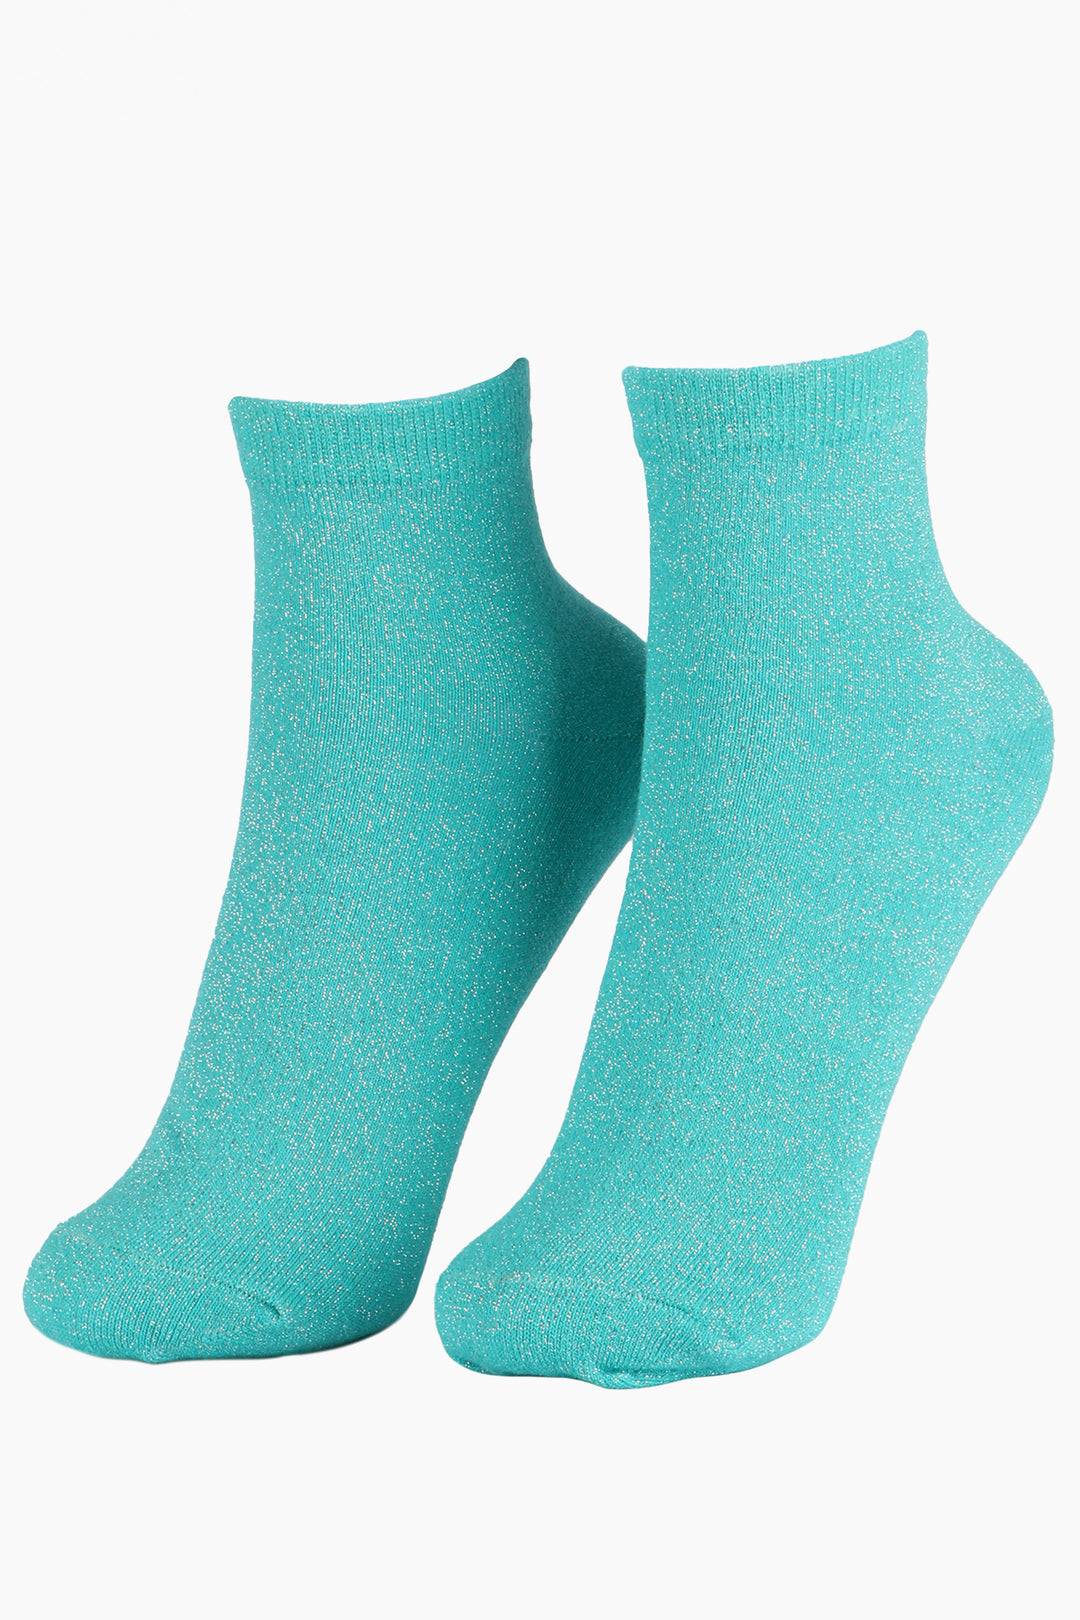 Cotton Blend All Over Glitter Anklet Socks in Turquoise